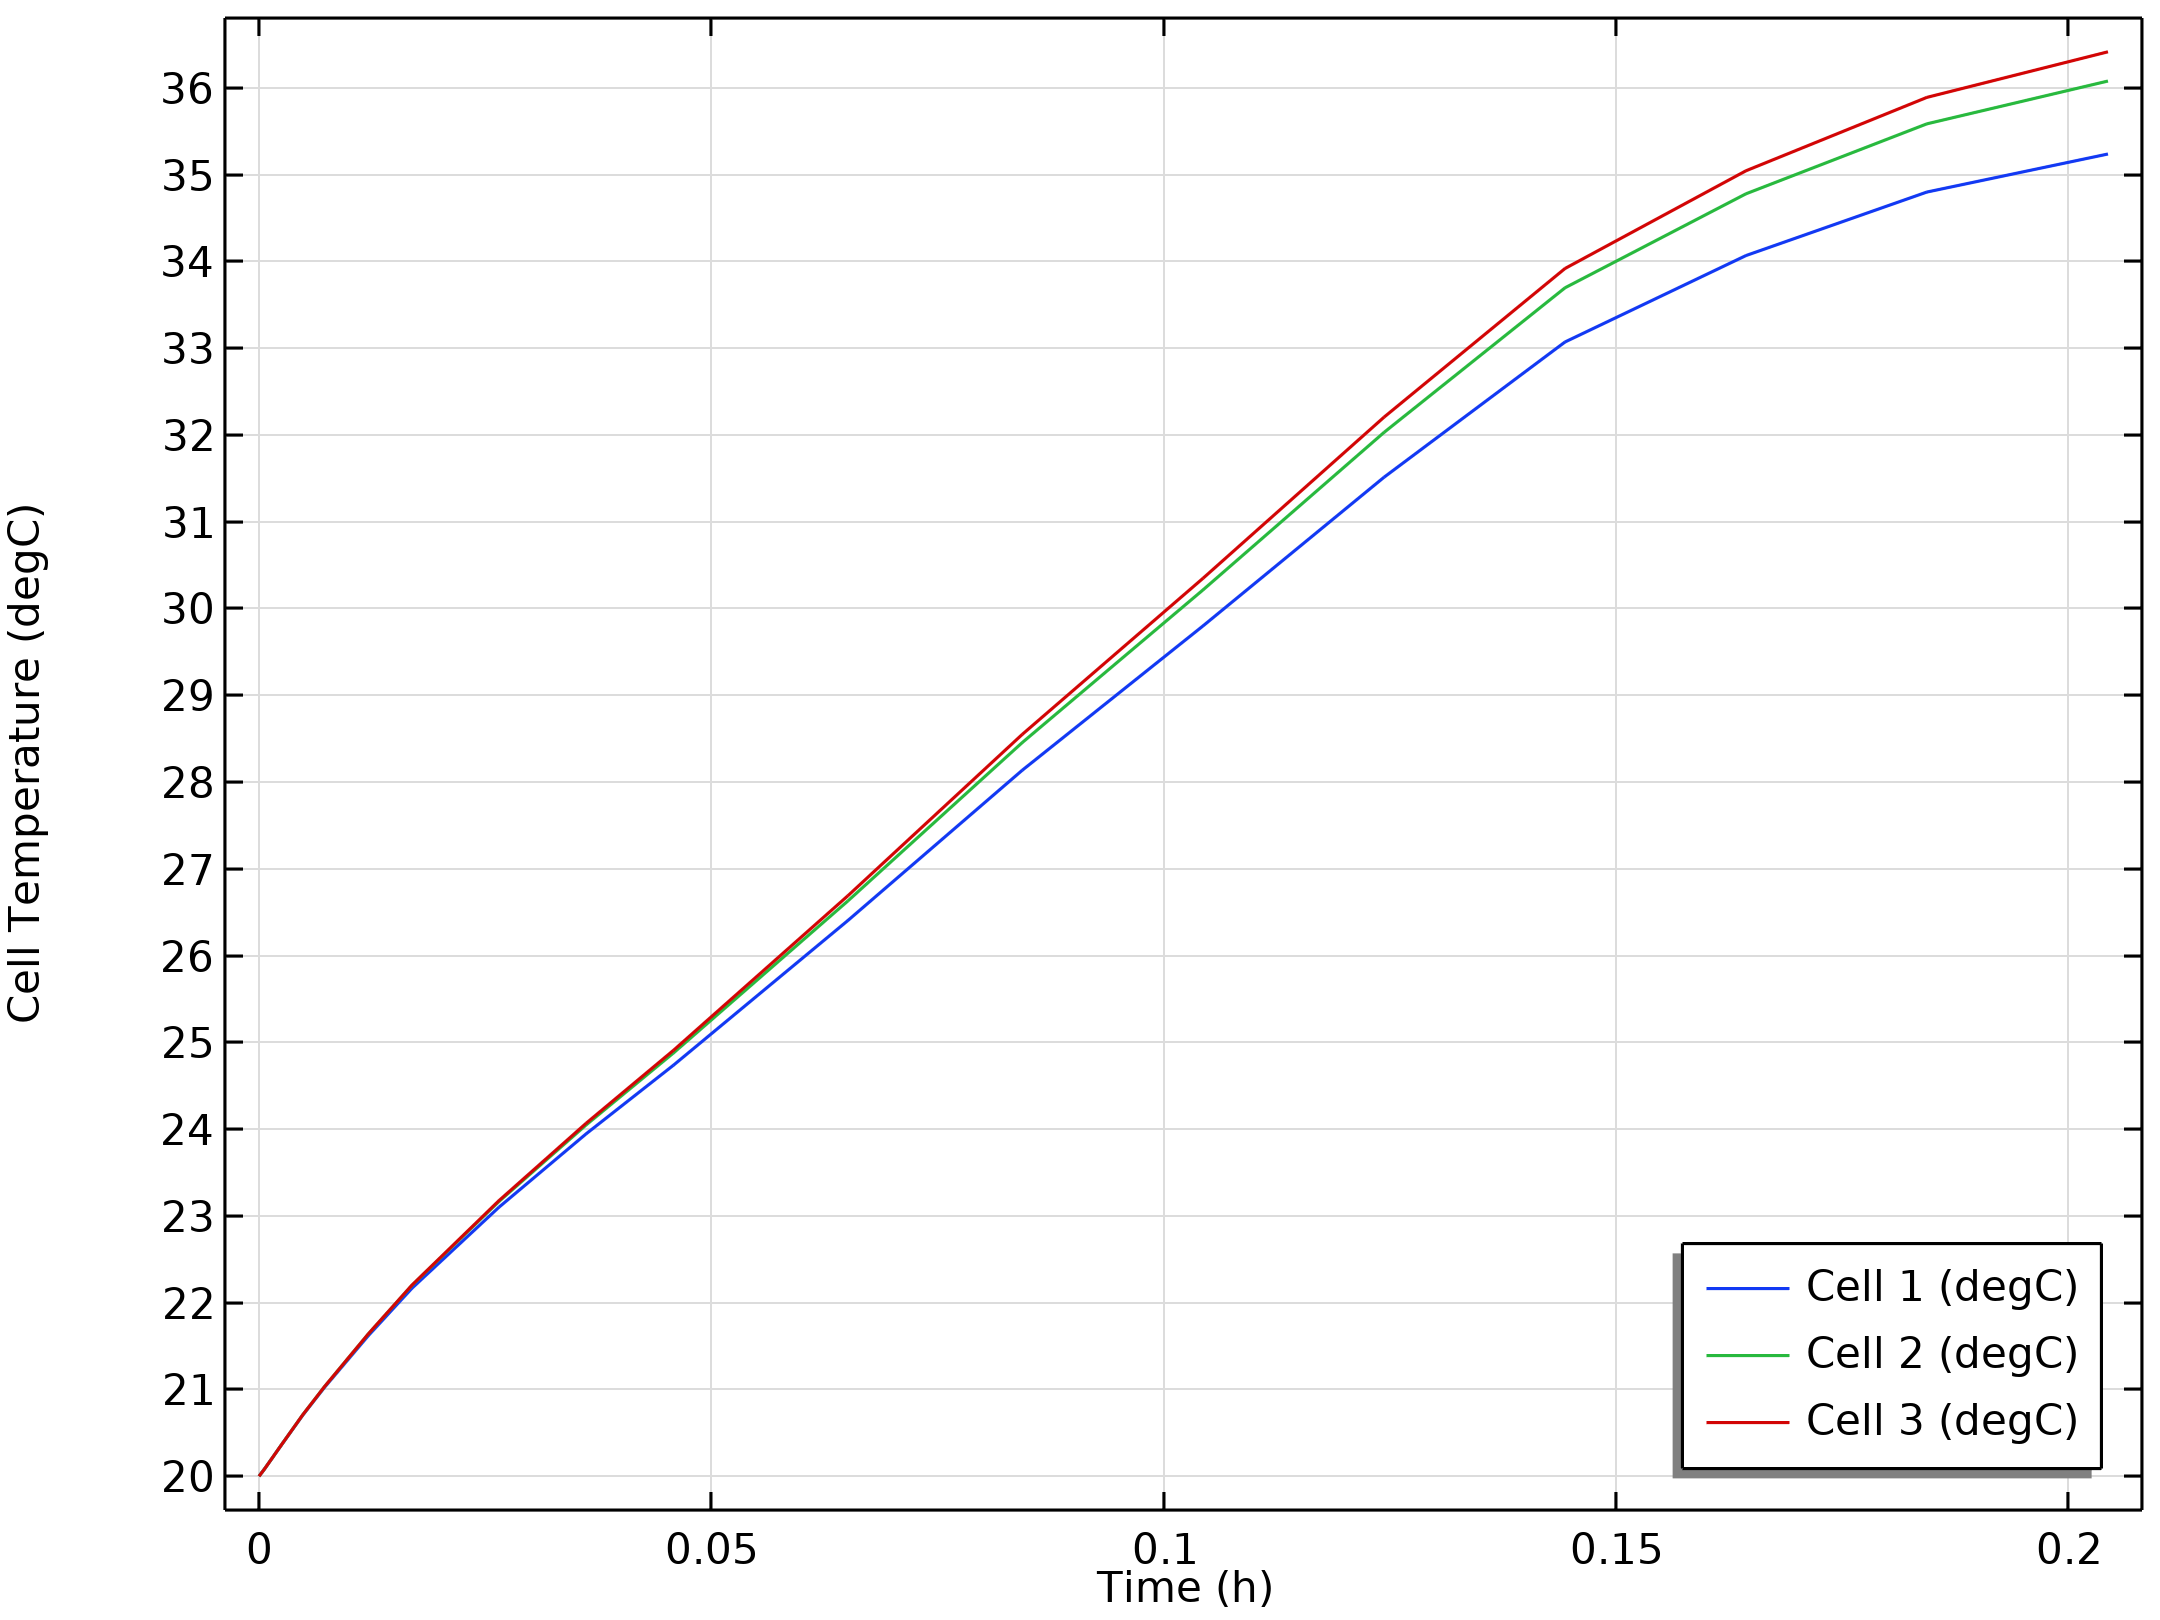 xy 图表上的三条曲线彩色绘图线显示了电池温度随时间的增加，蓝色电池 1、绿色电池 2 和红色电池 3。